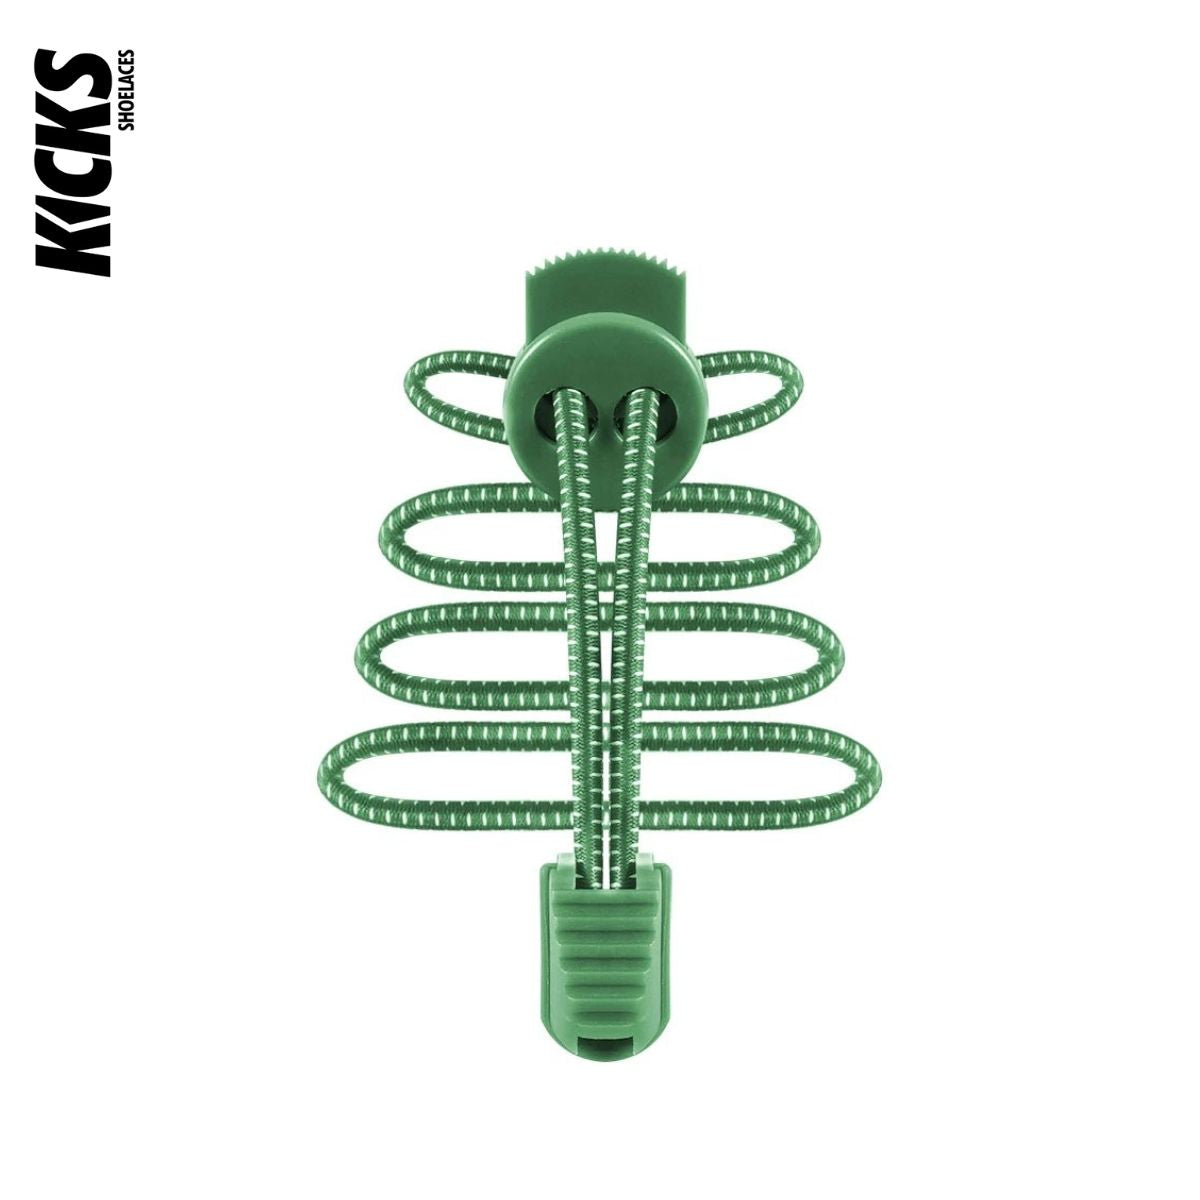 kicks-lock-laces-green